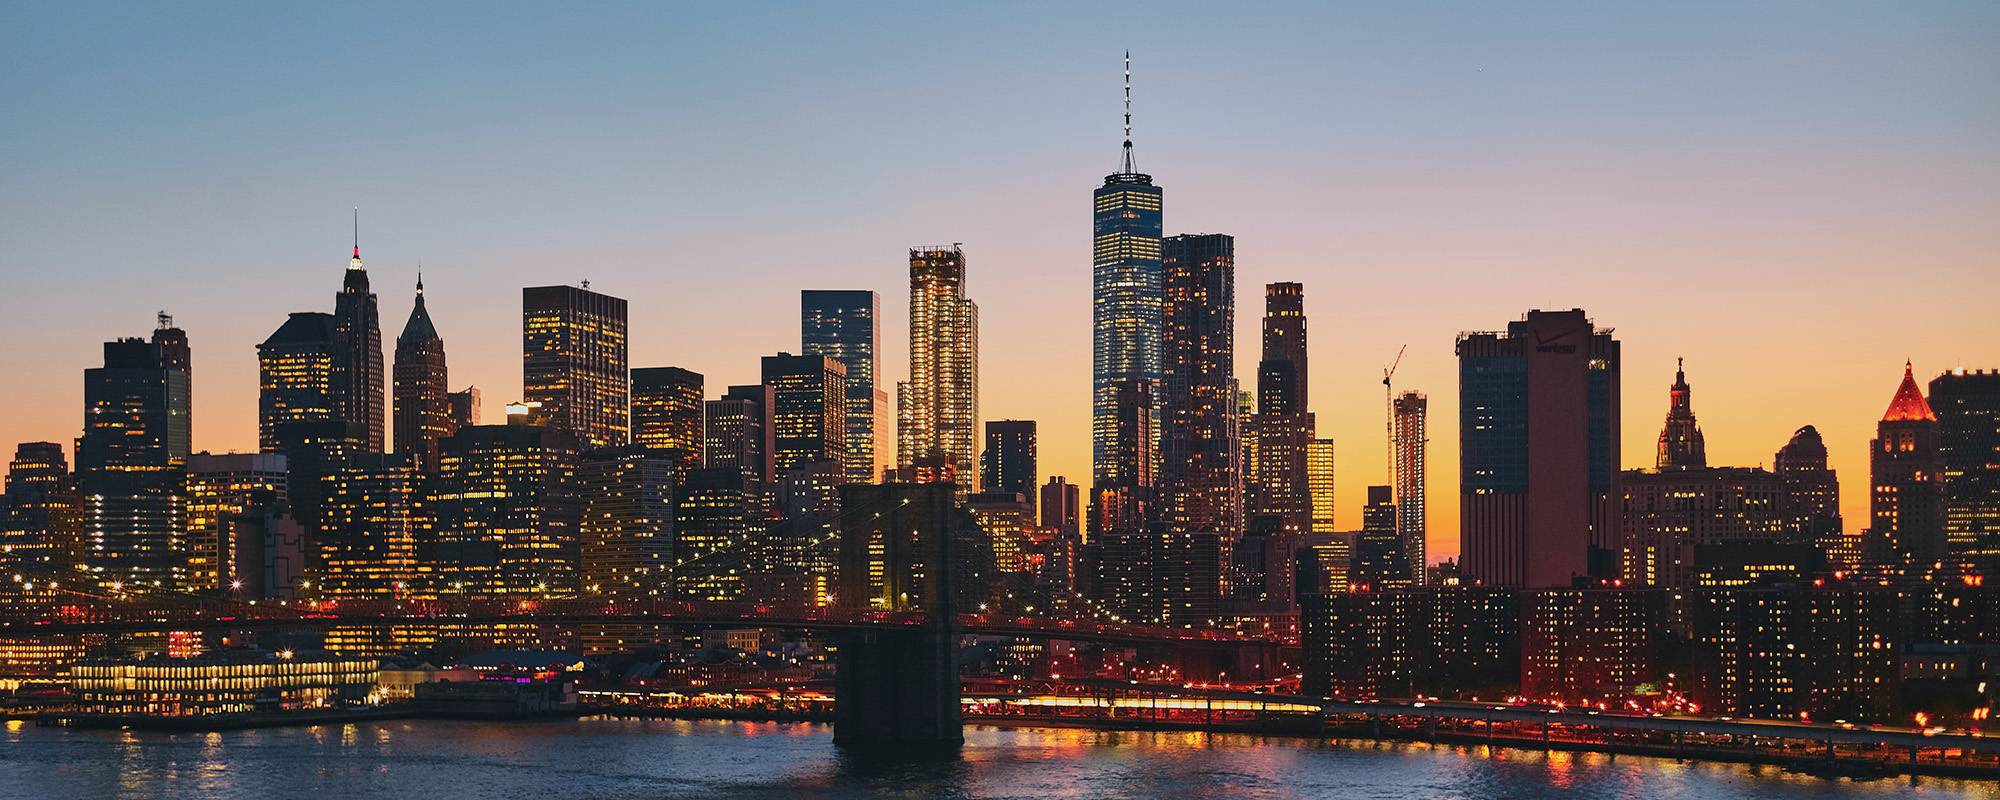 New York City skyline in the evening